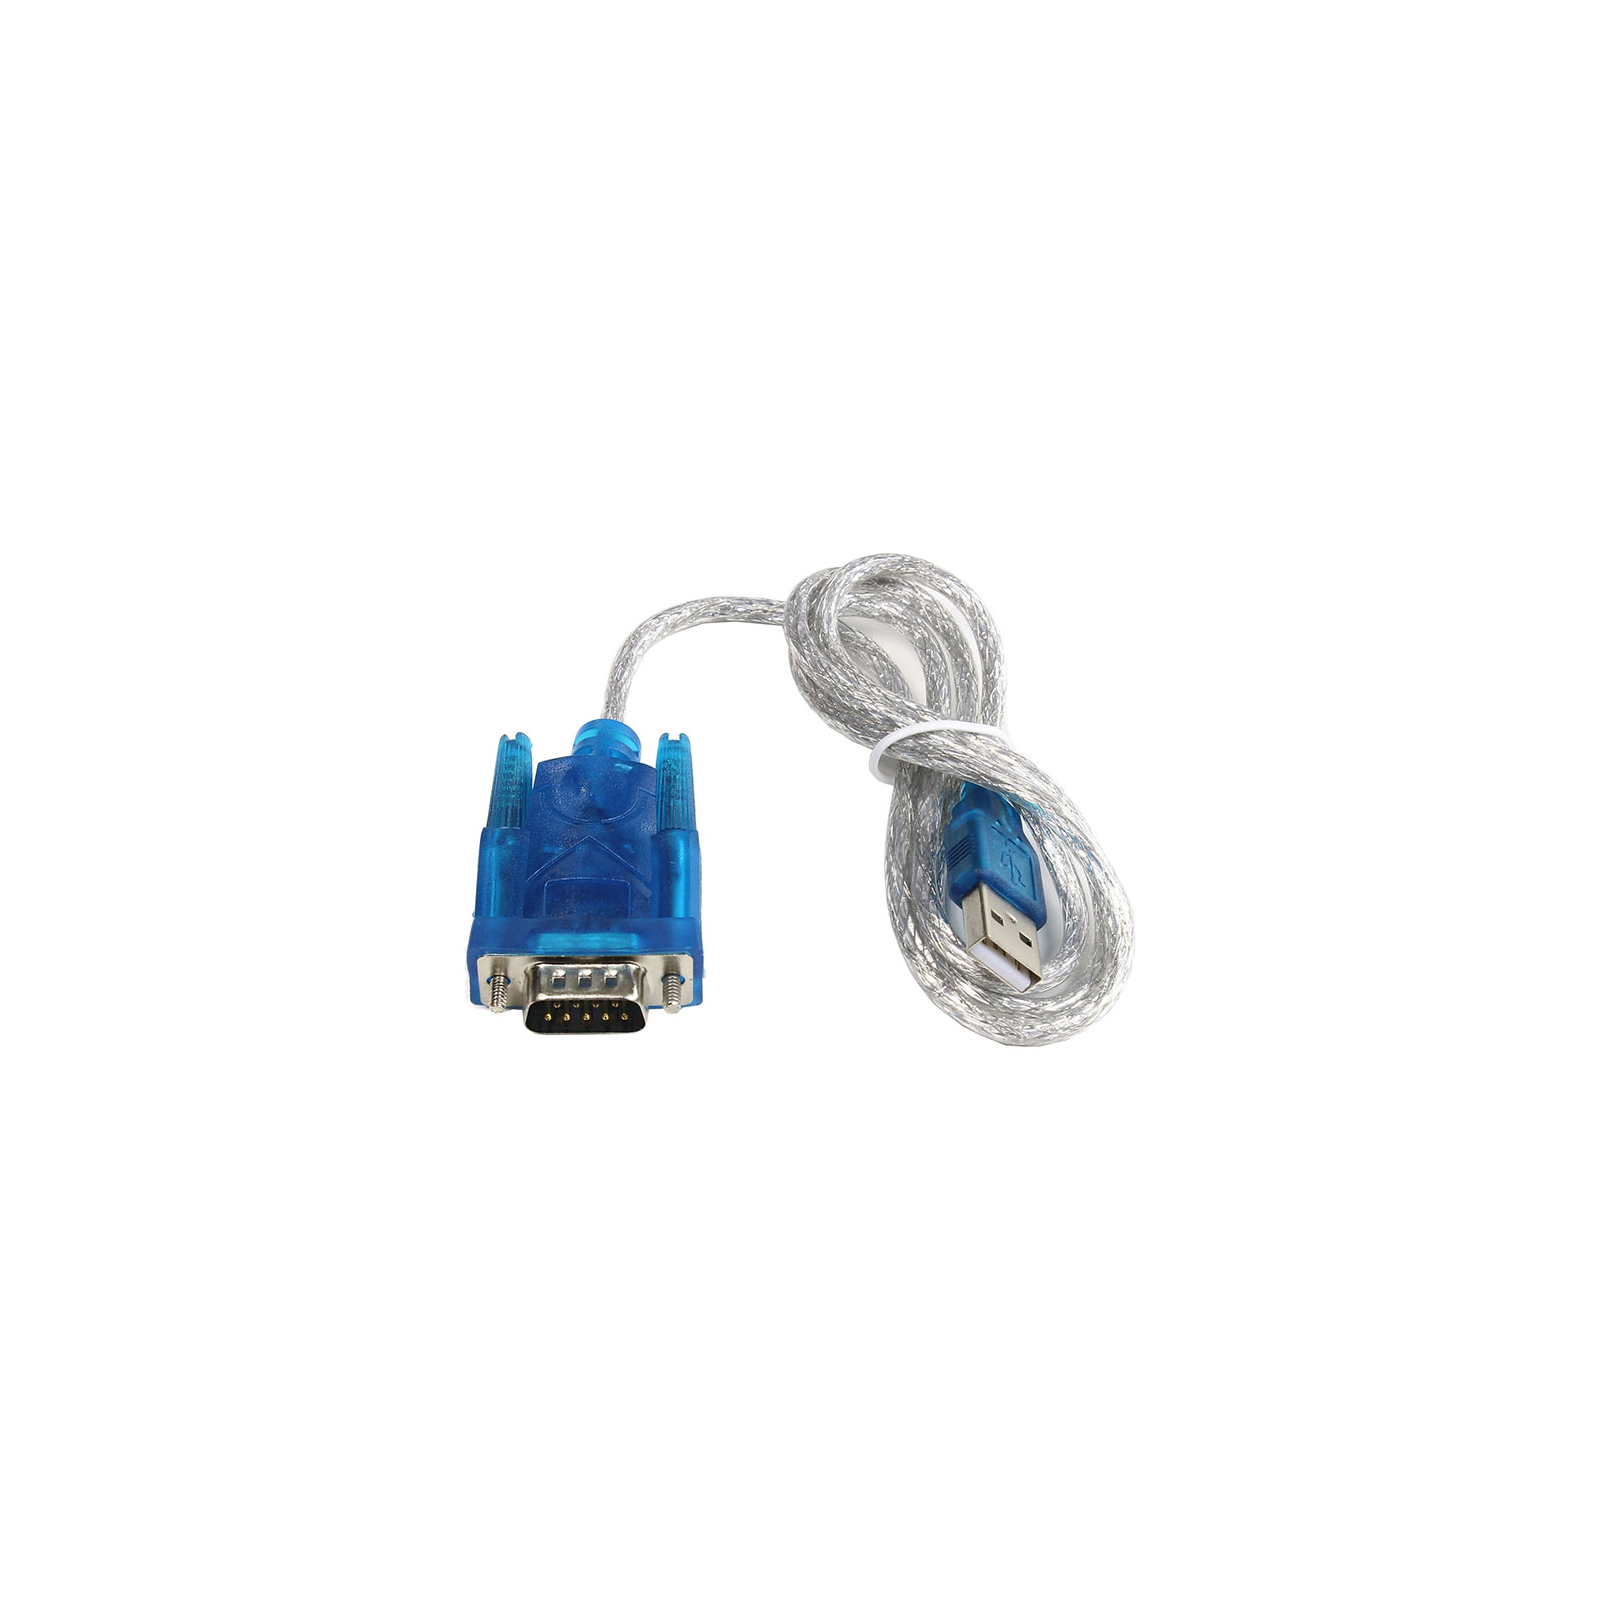 Переходник Atcom USB to Com cable 0,85м (USB to RS232) (17303)